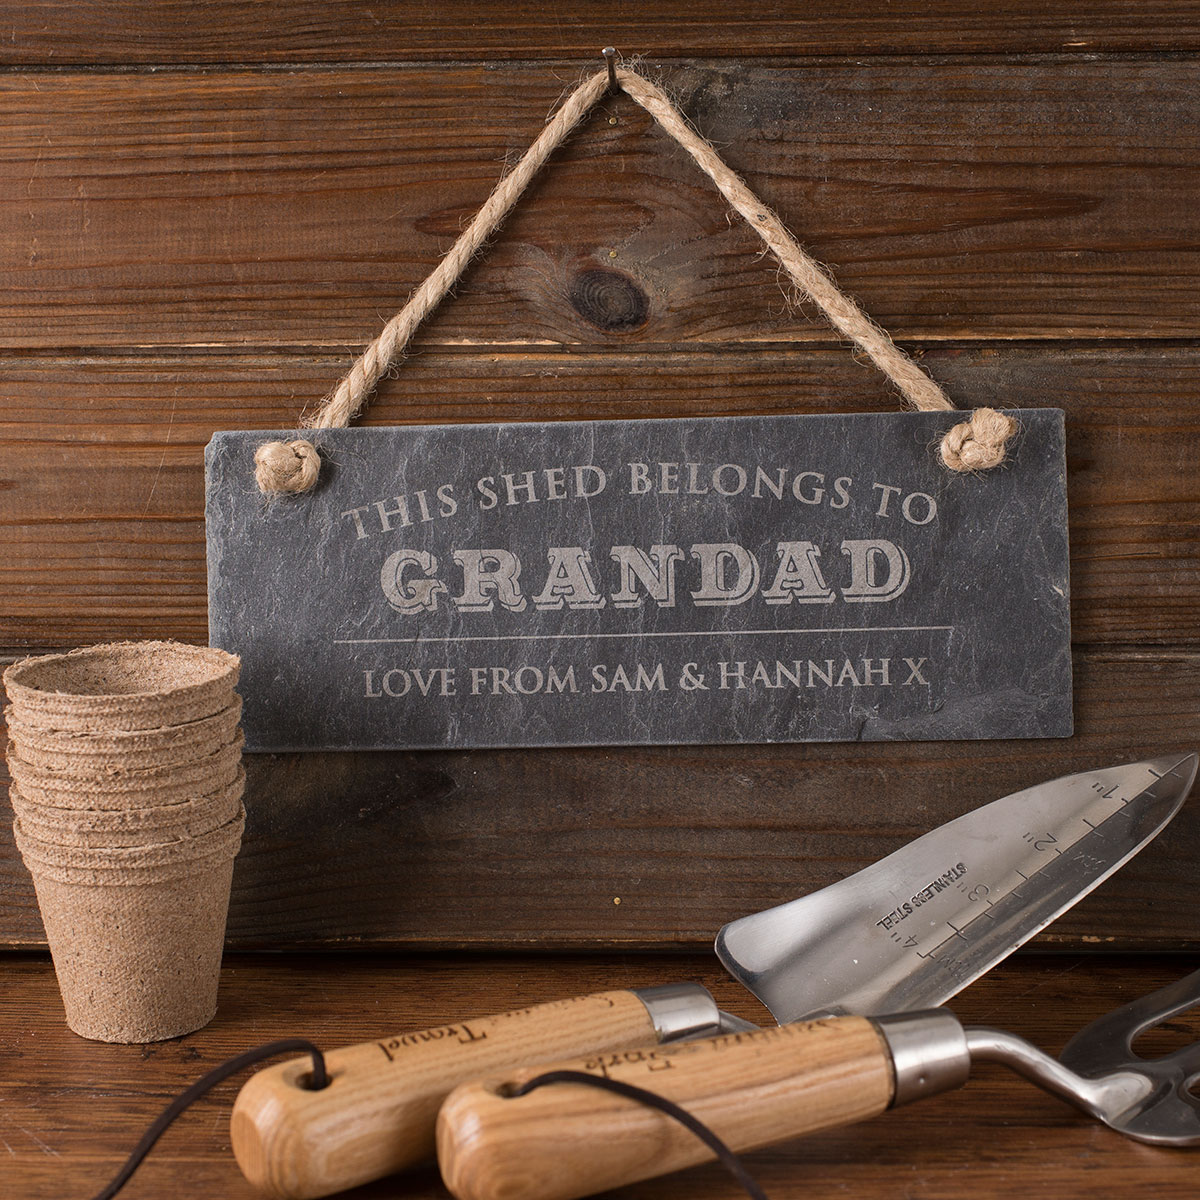 Personalised Engraved Hanging Slate Sign - Grandad's Shed